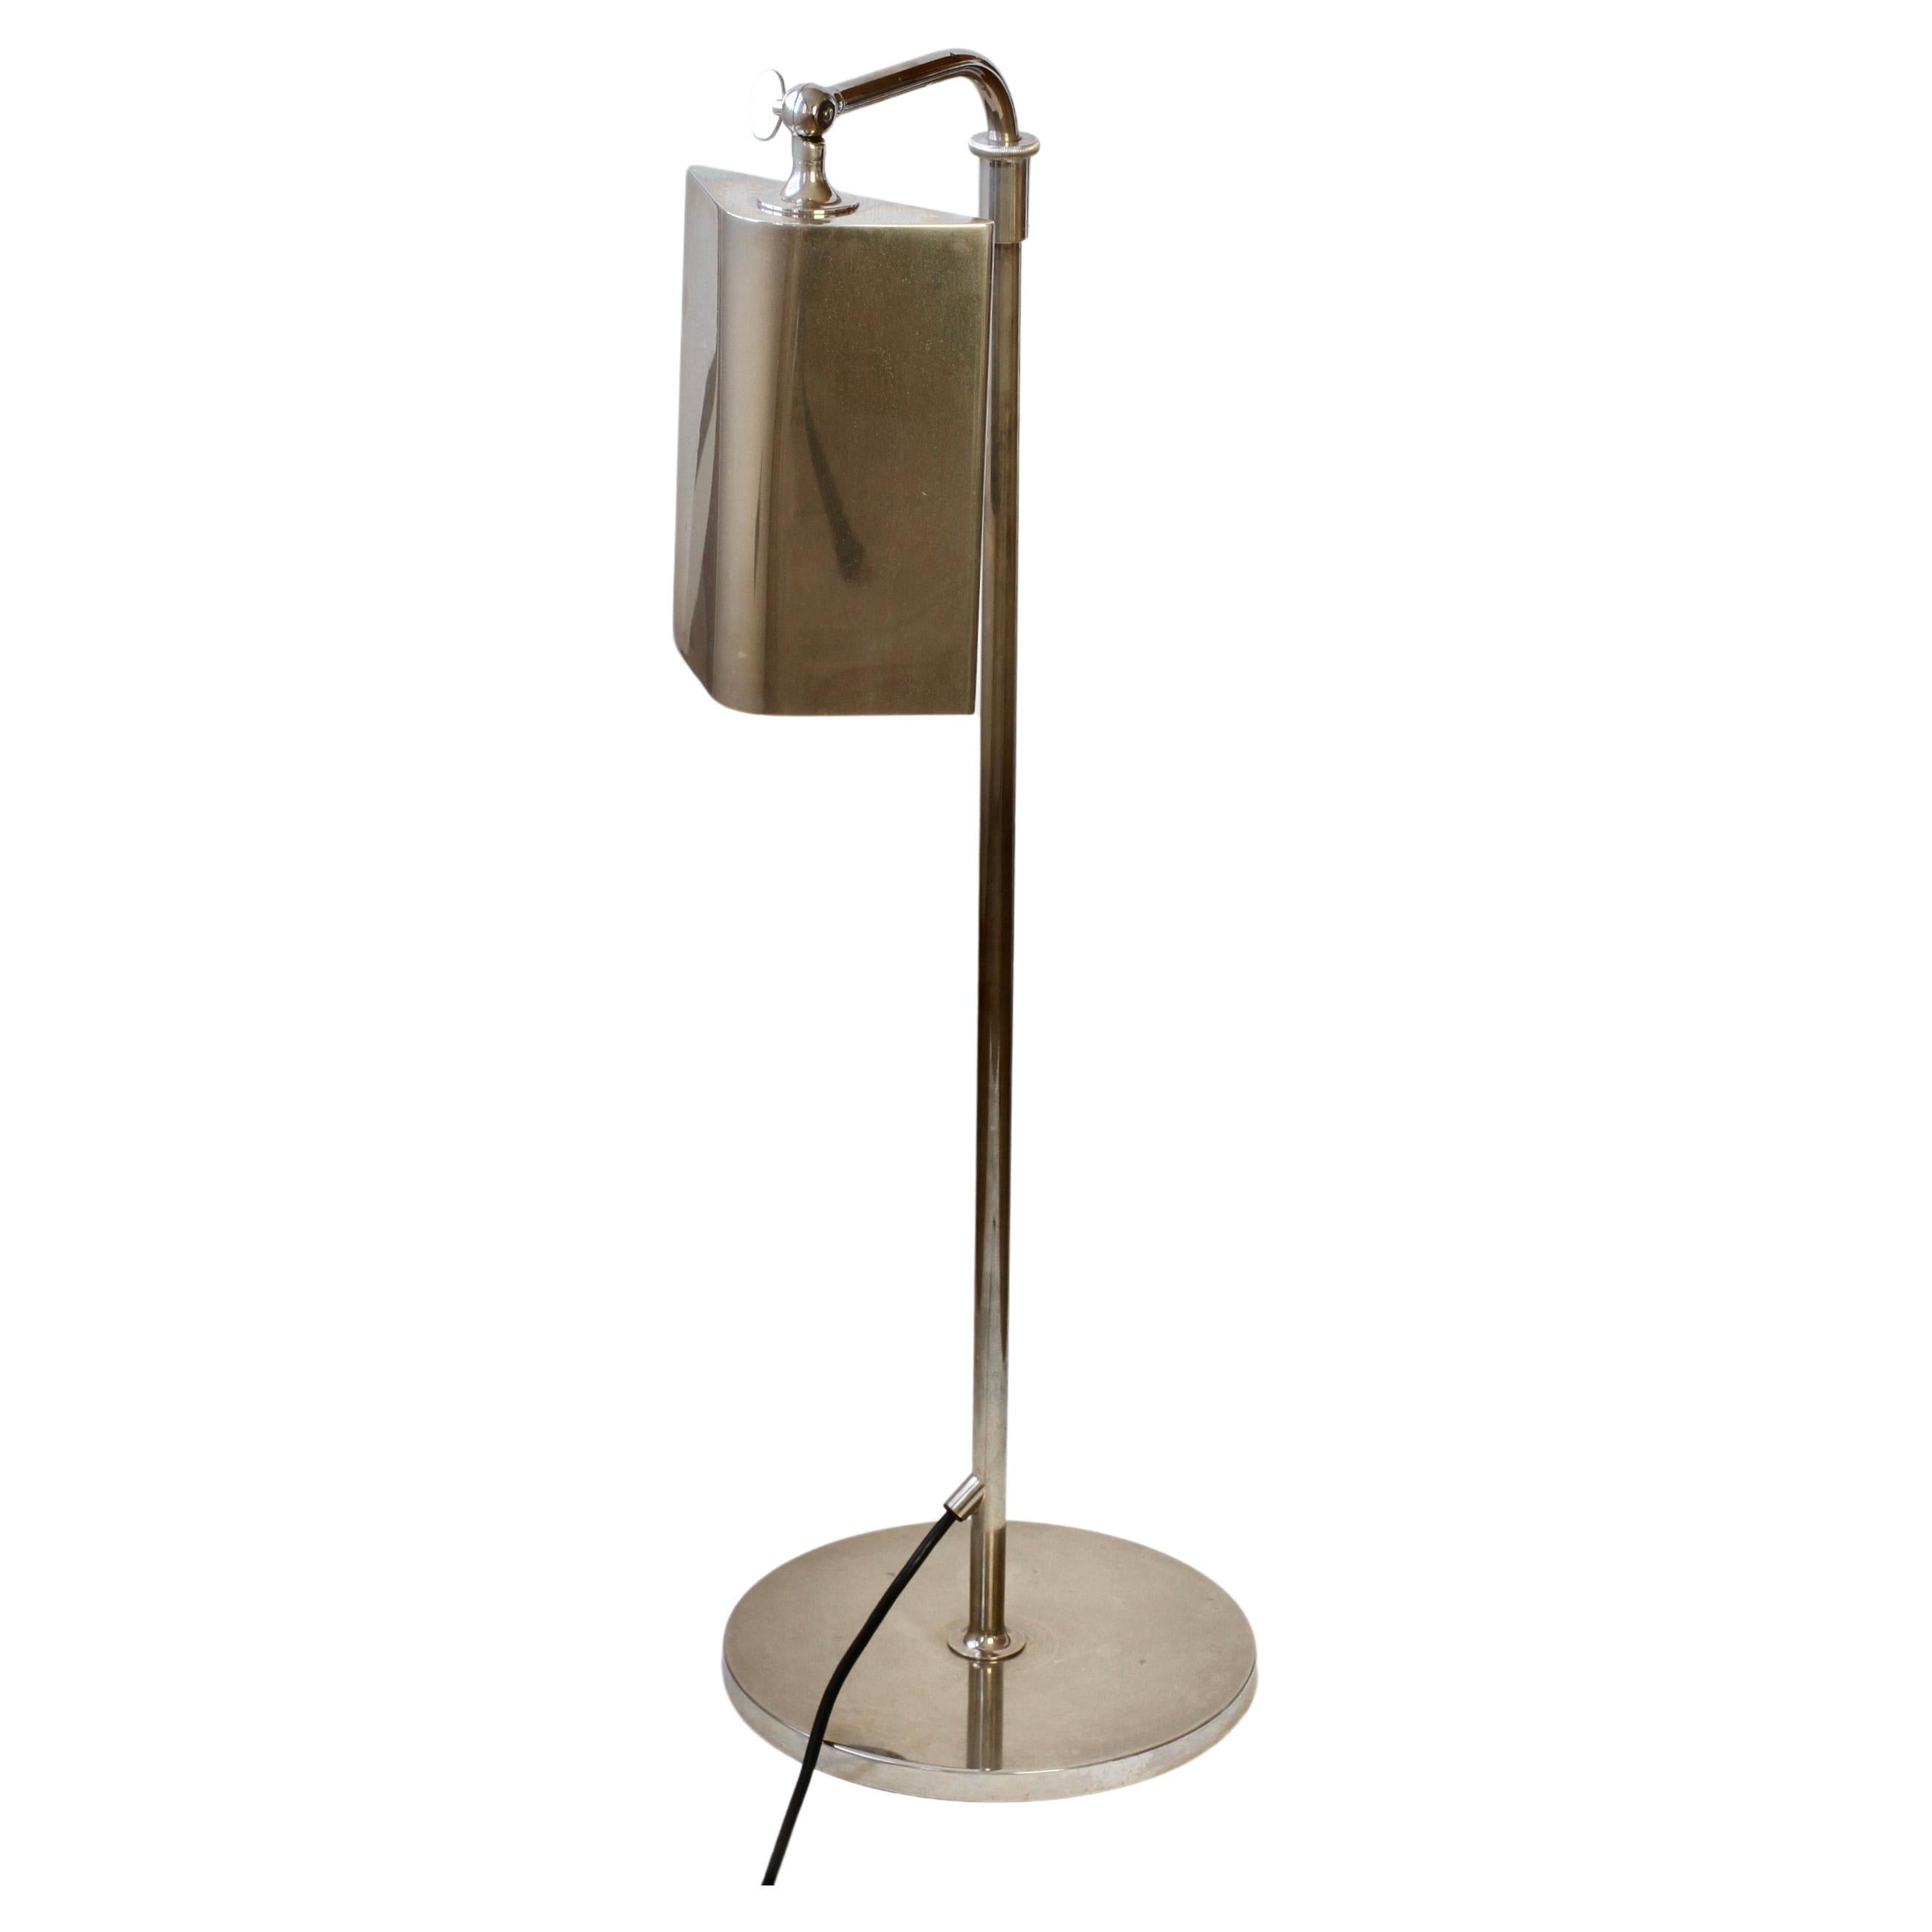 Metal Florian Schulz Mid-Century Vintage Modernist Nickel Adjustable Floor Lamp Light For Sale